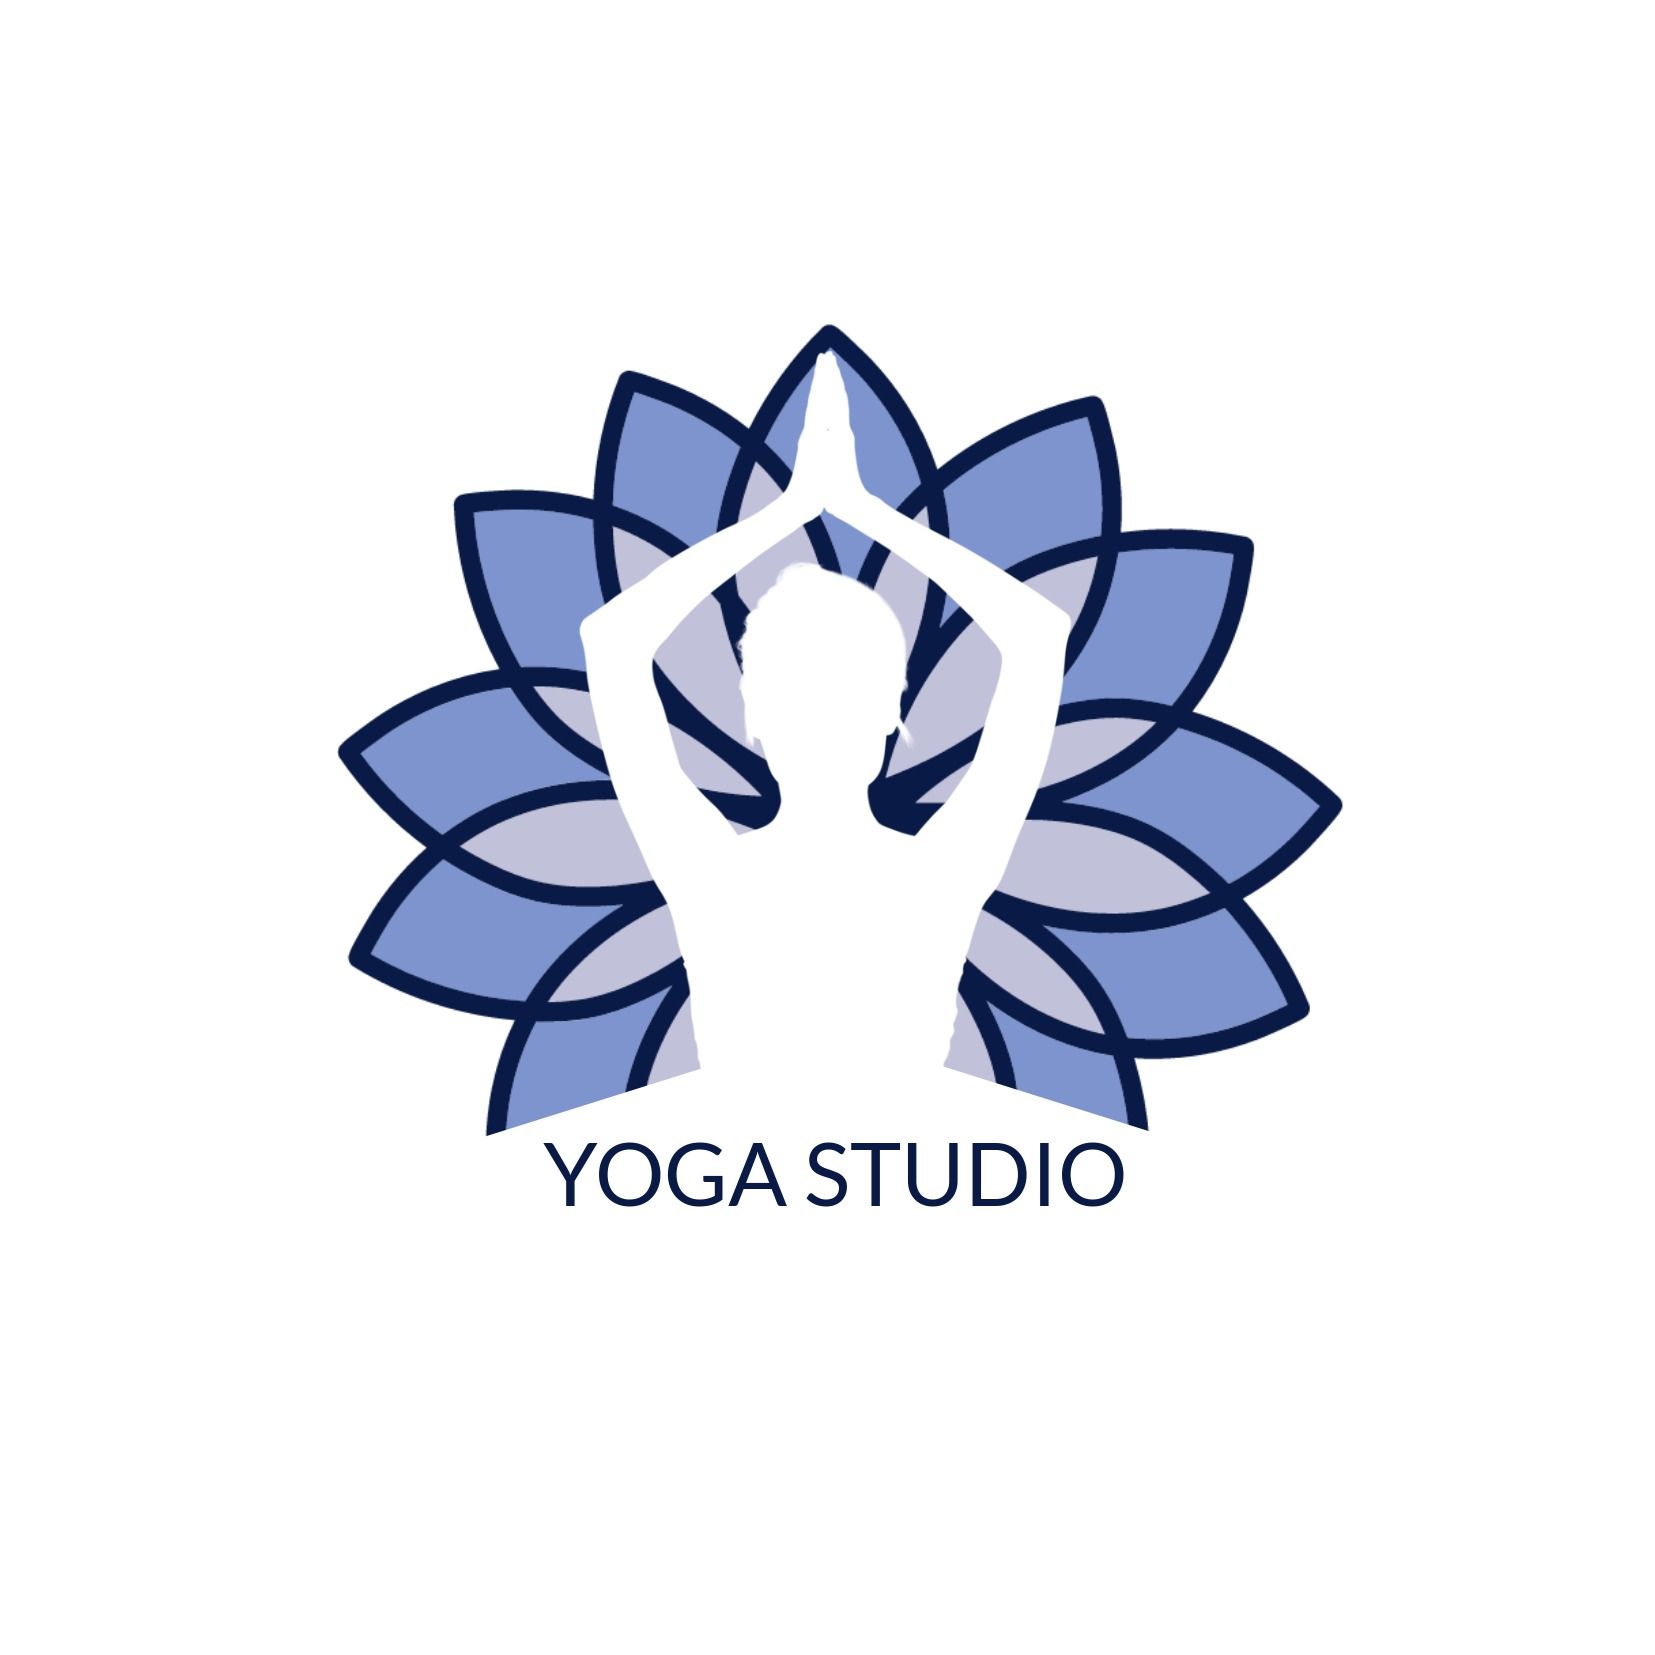 Yoga Studio Creative Logo Designs - A step-by-step guide to creative logo design - Image